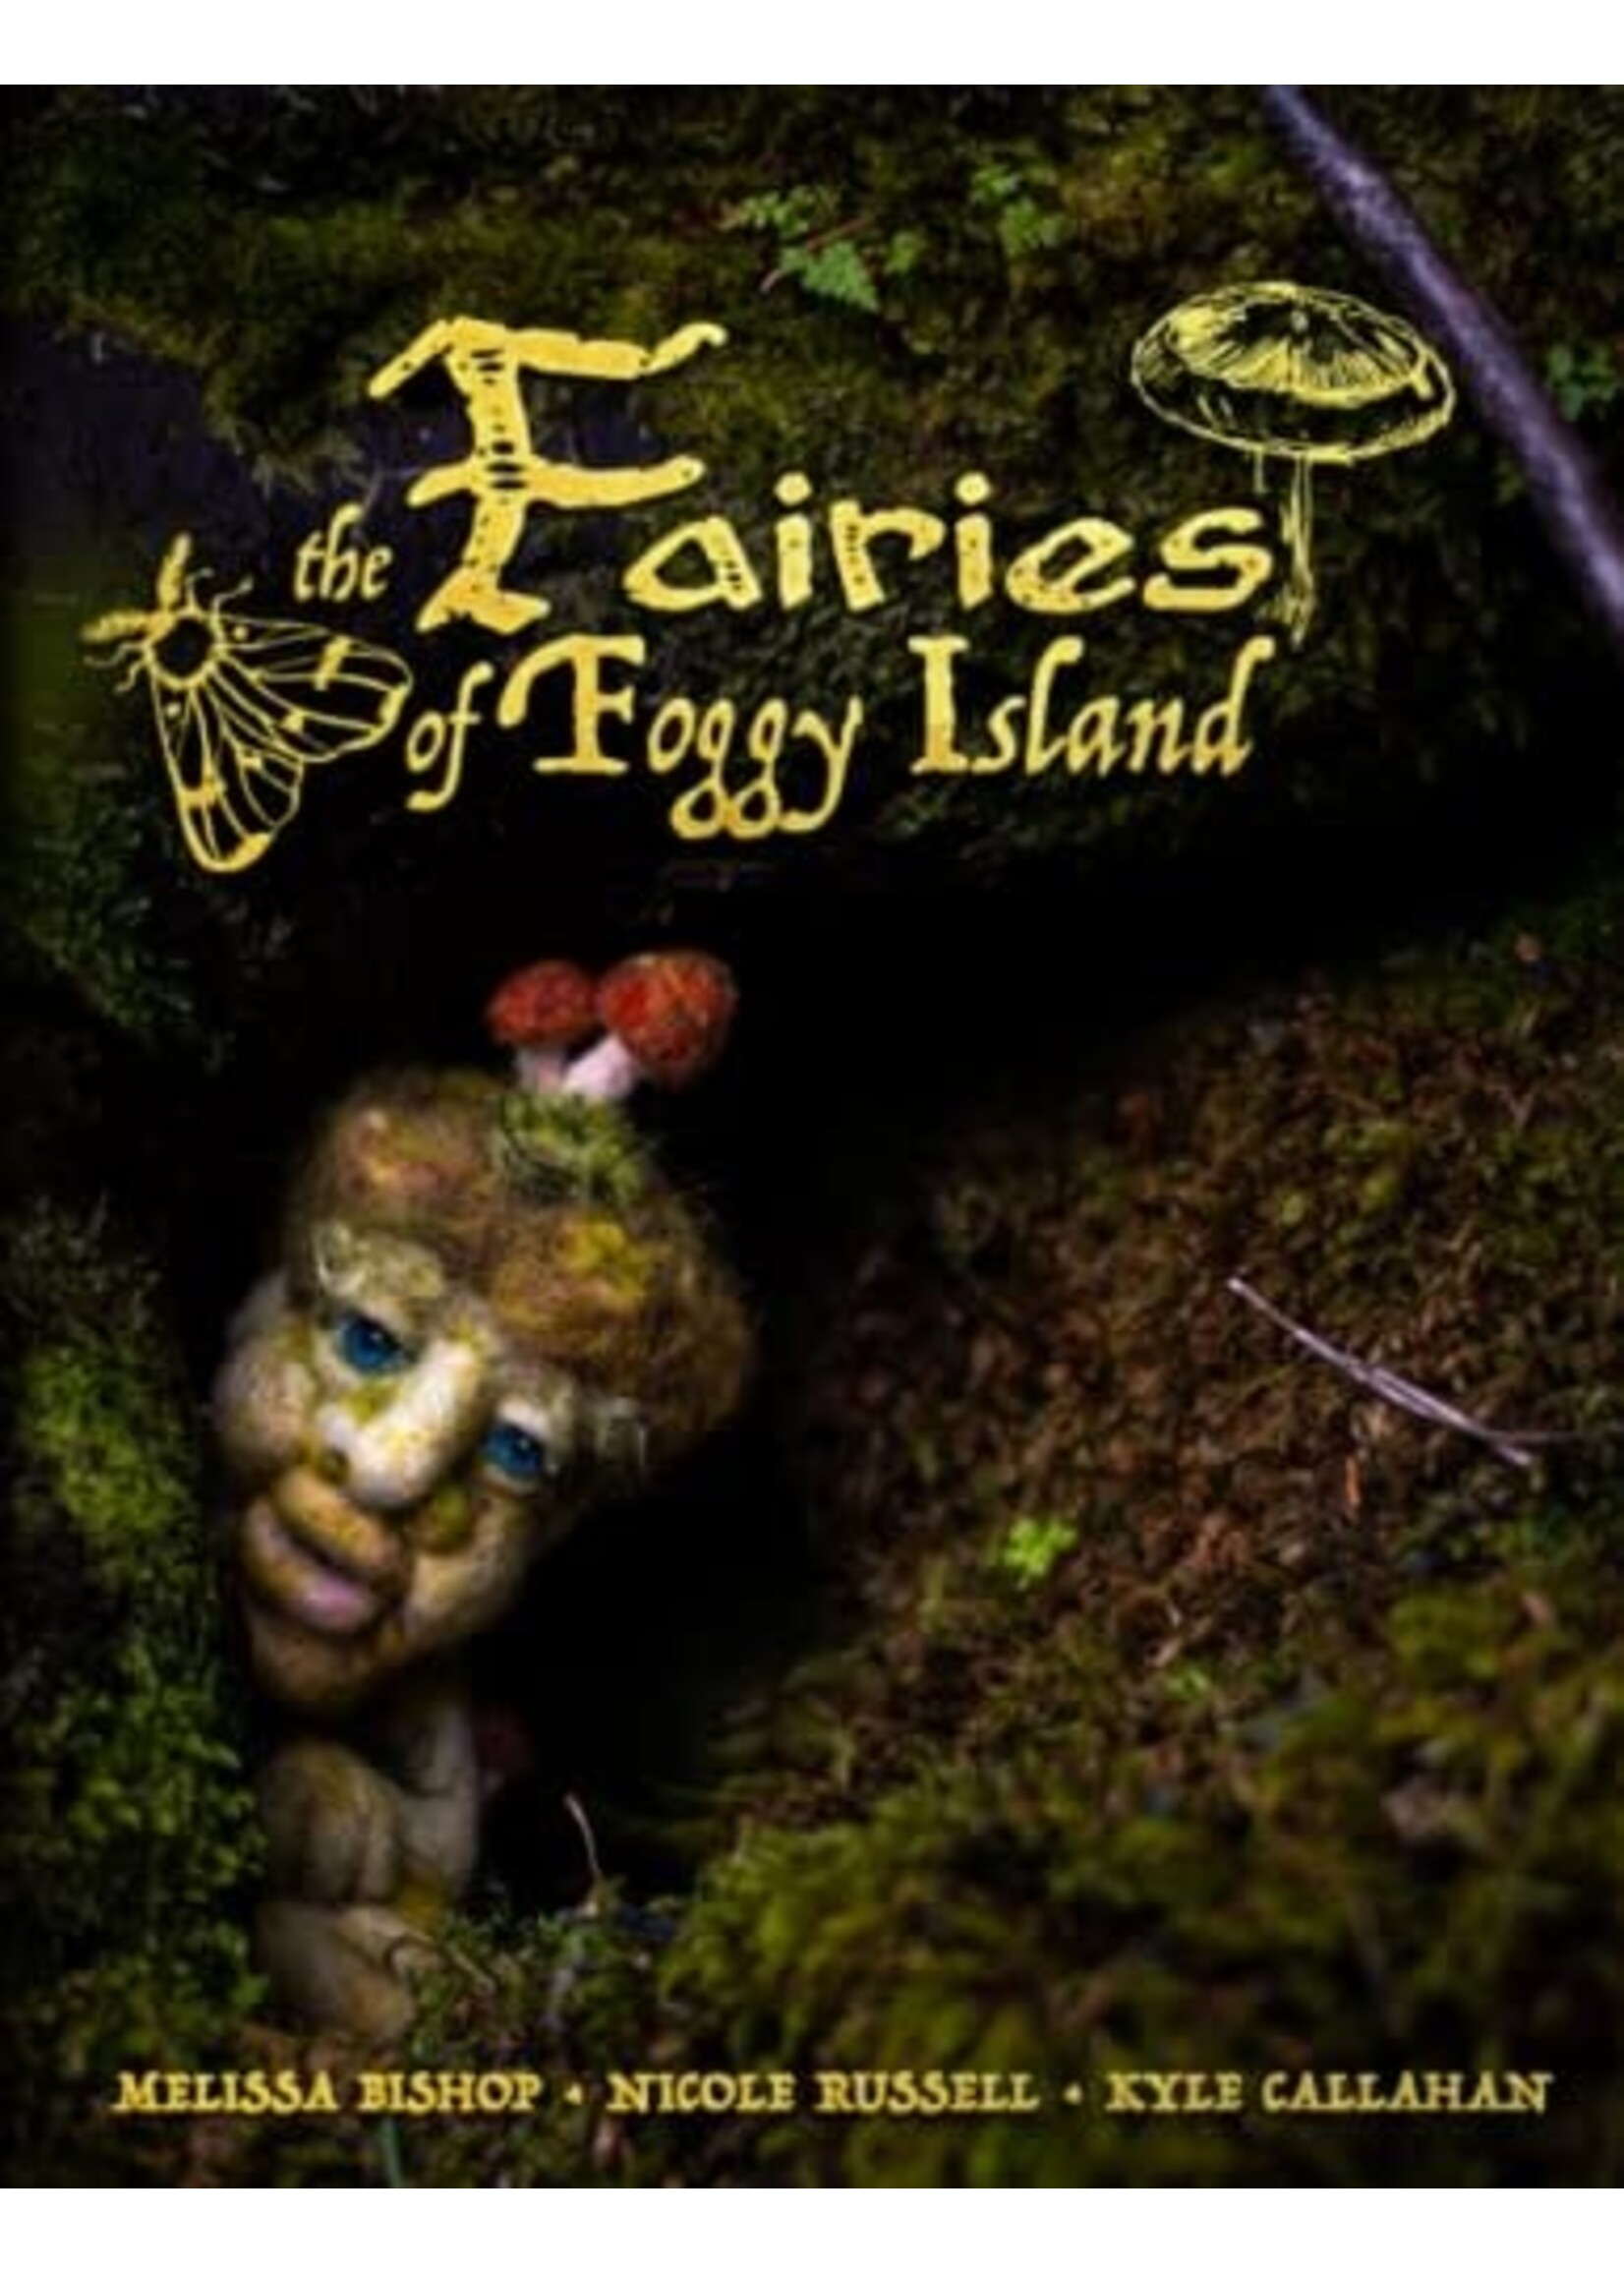 Fairies of Foggy Island by Melissa Bishop, Kyle Callahan, Nicole Russell